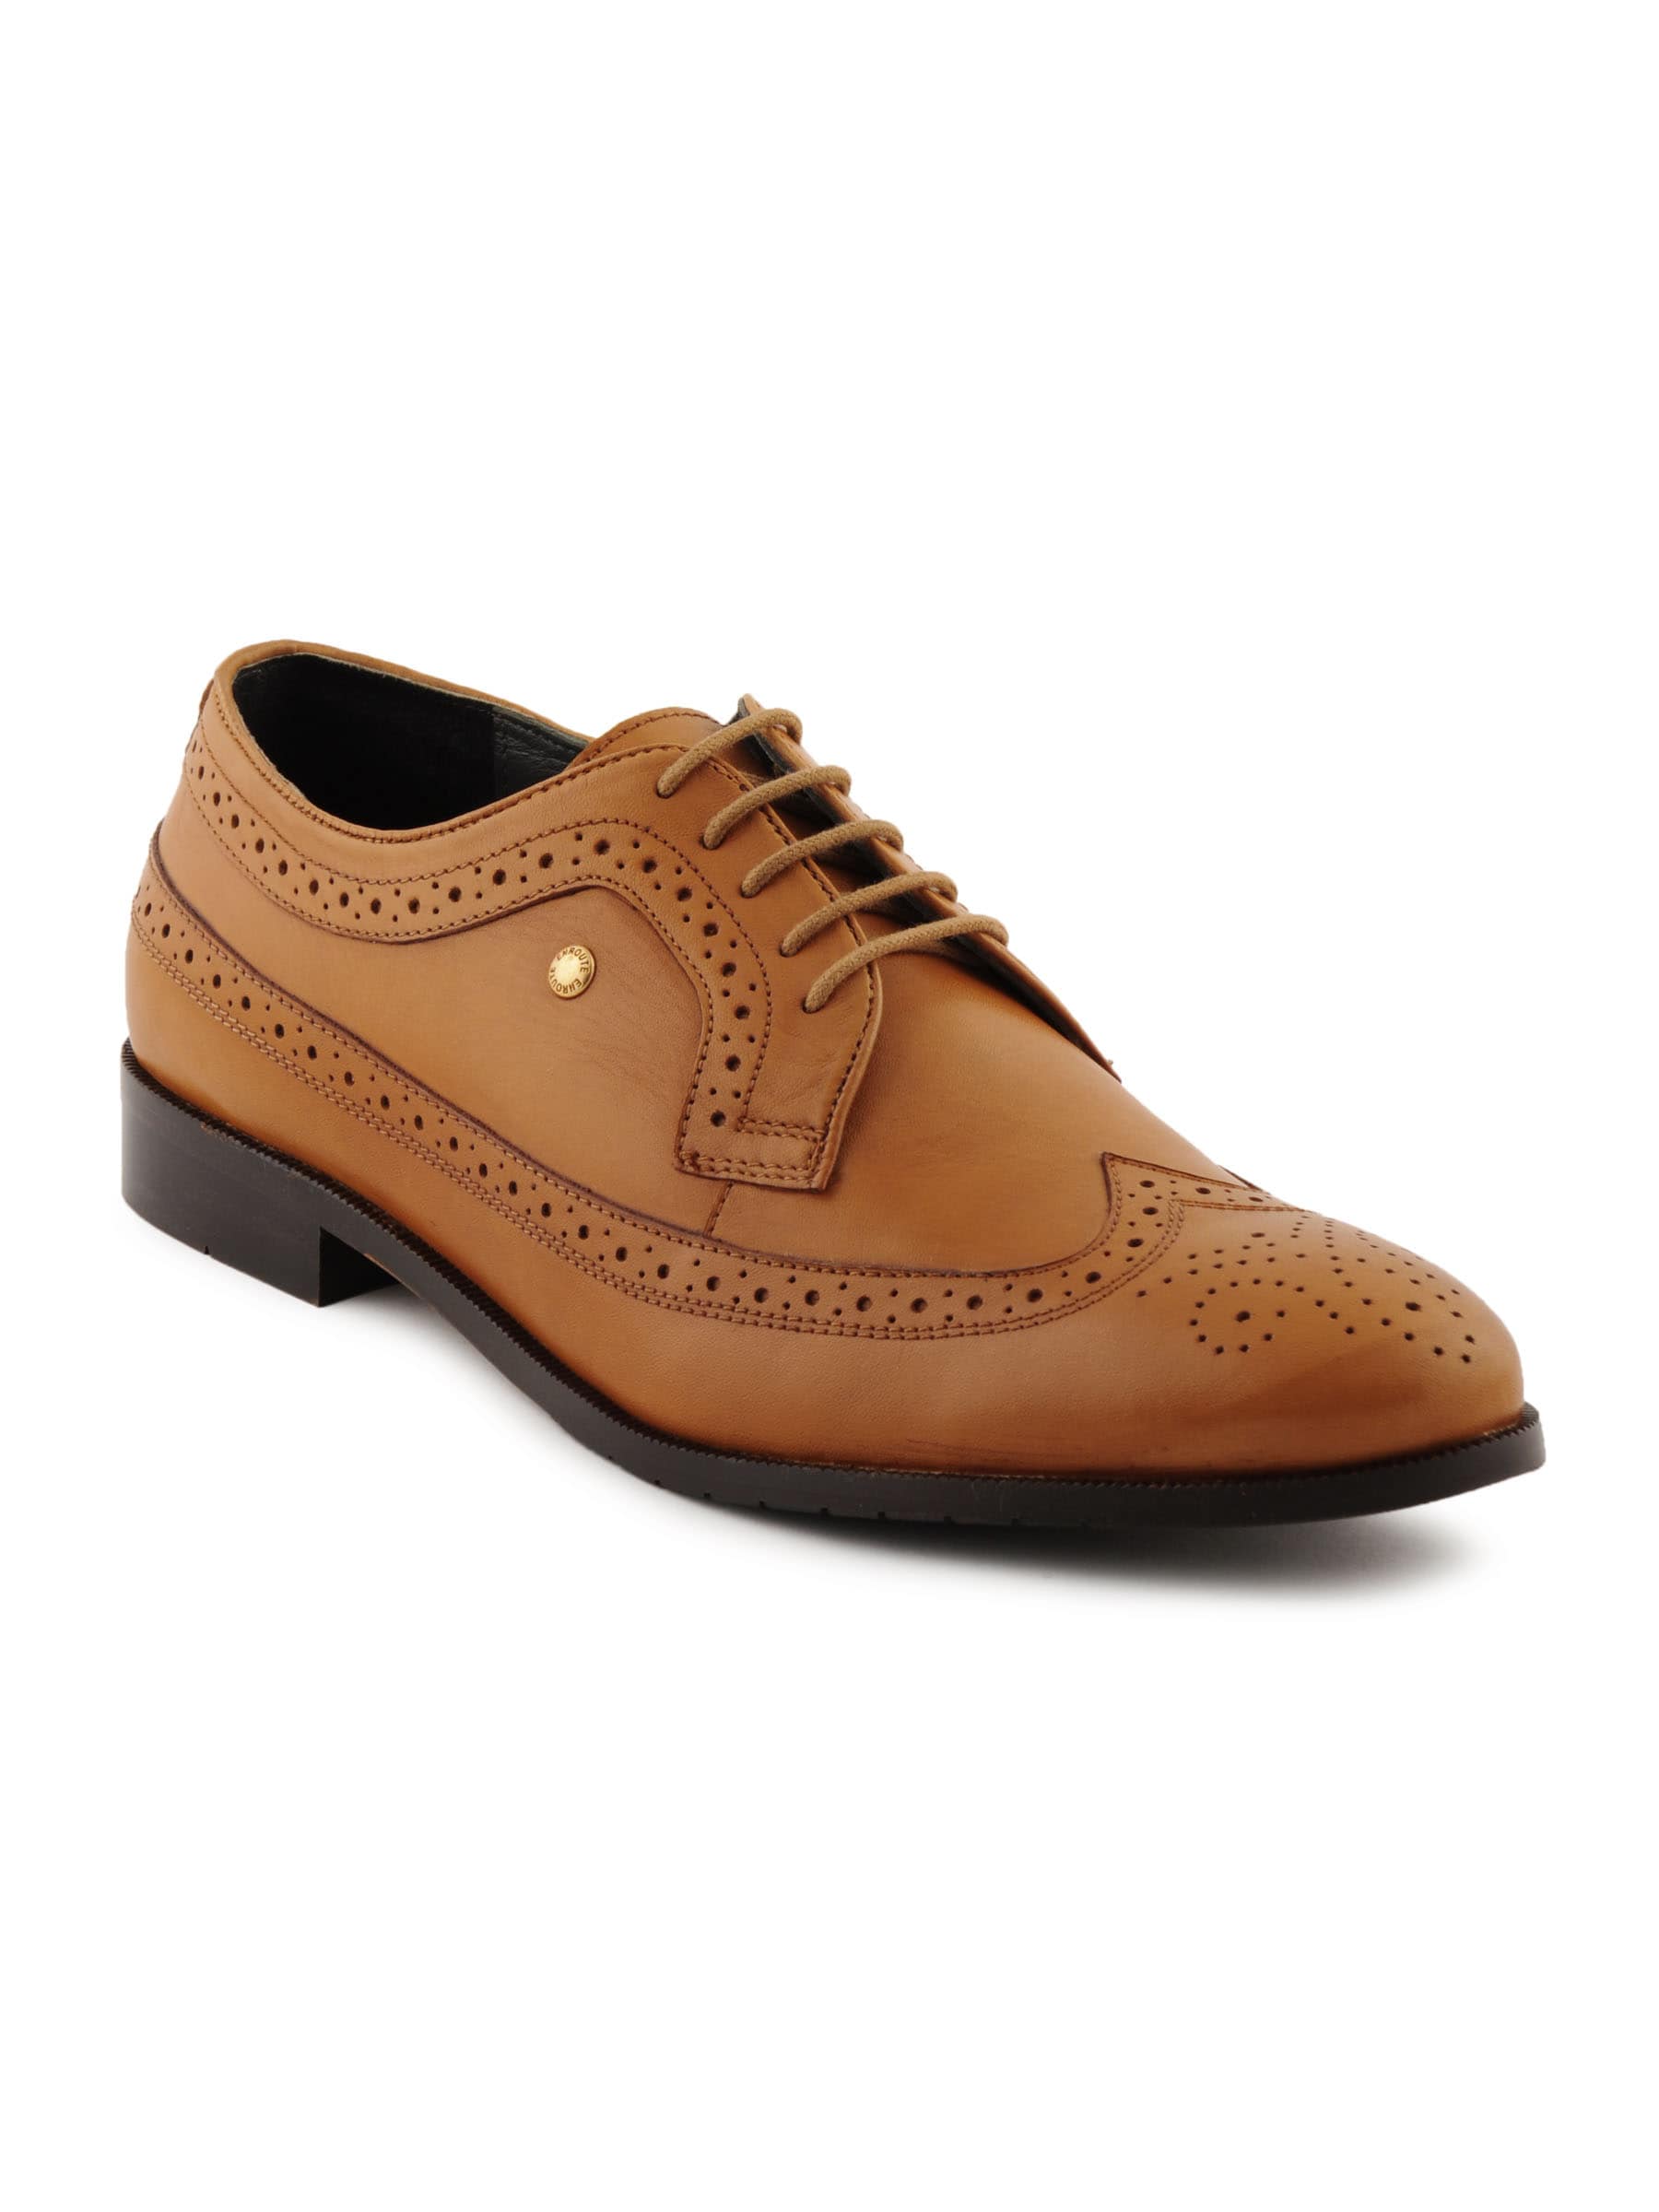 Enroute Men Leather Tan Formal Shoes